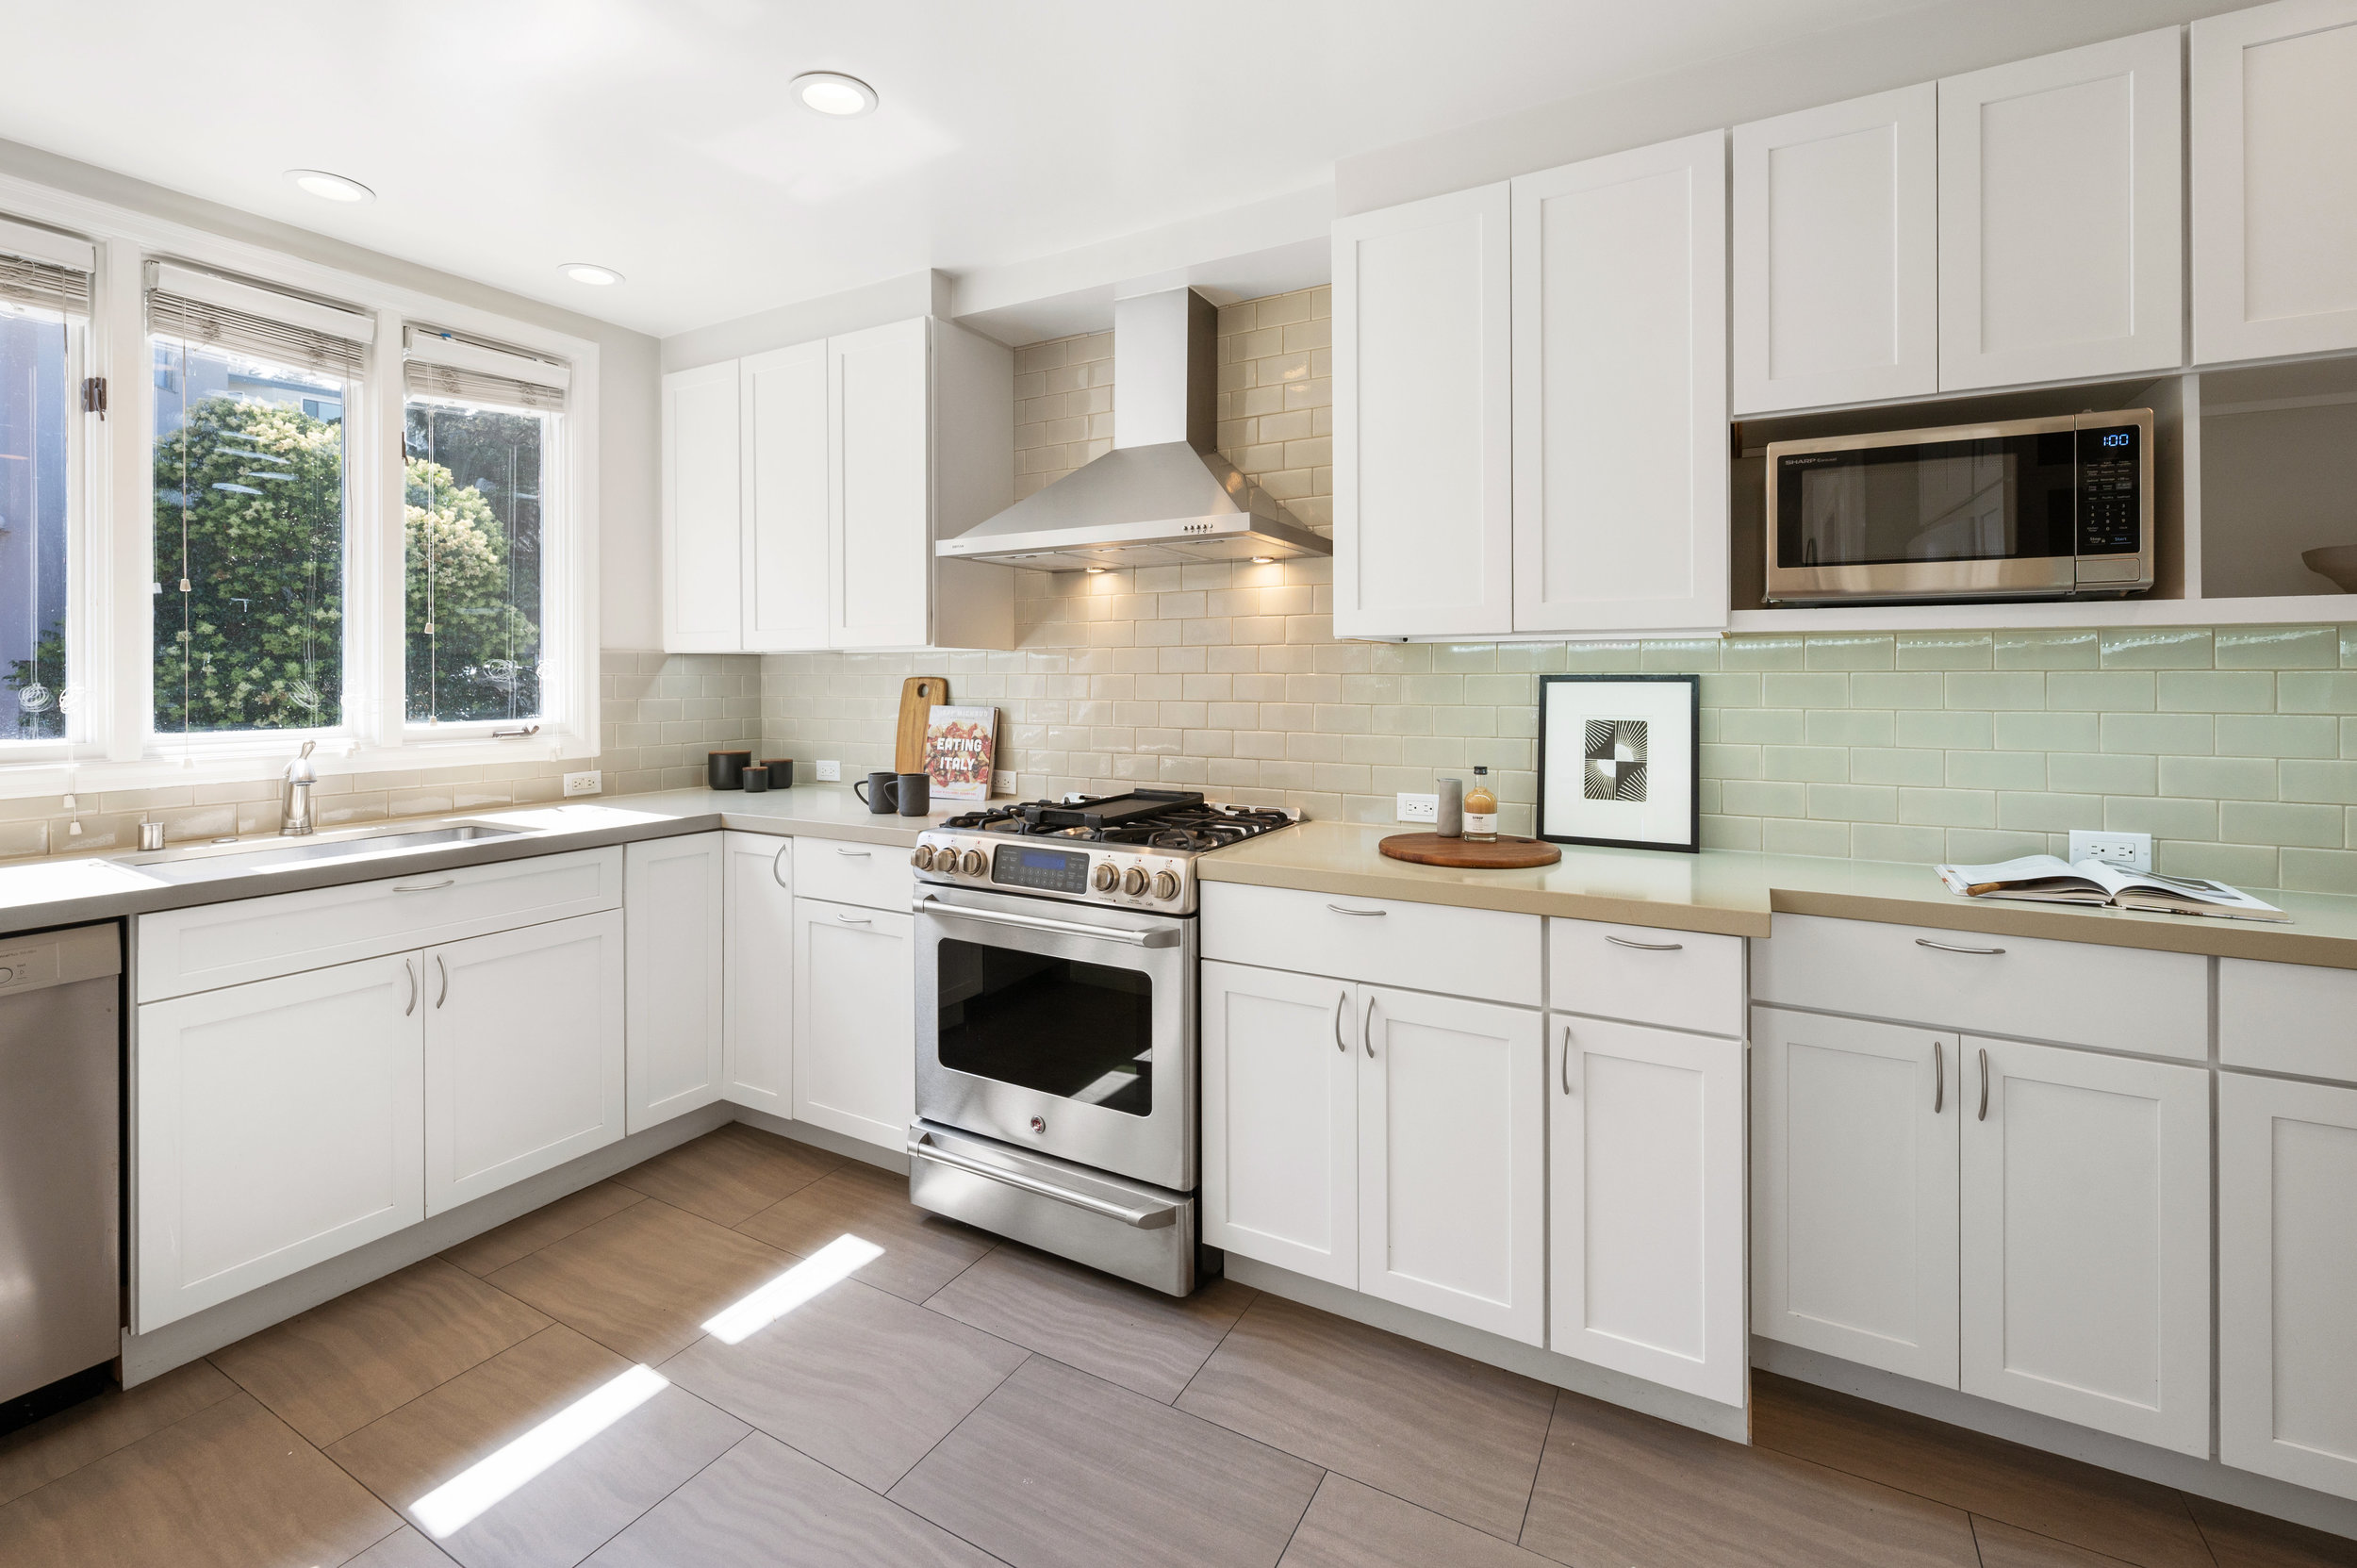 Property Photo: Kitchen, showing abundant natural light and white cabinets